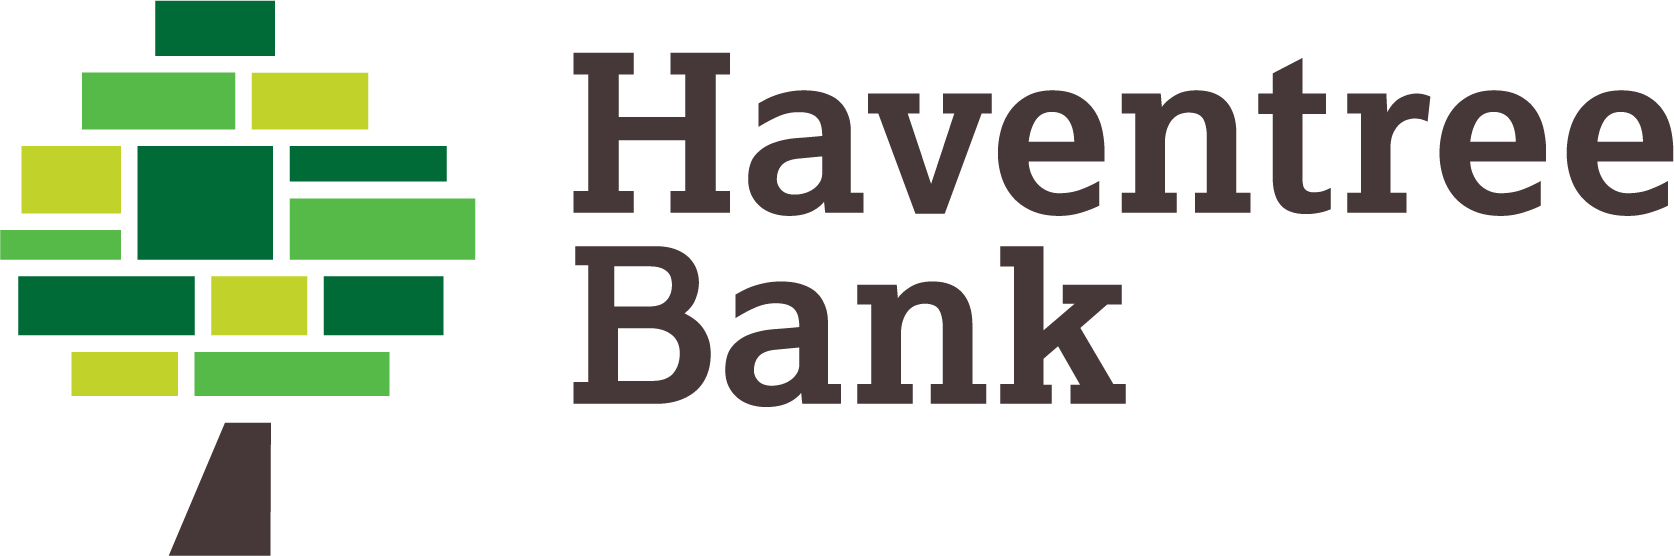 Haventree Bank logo